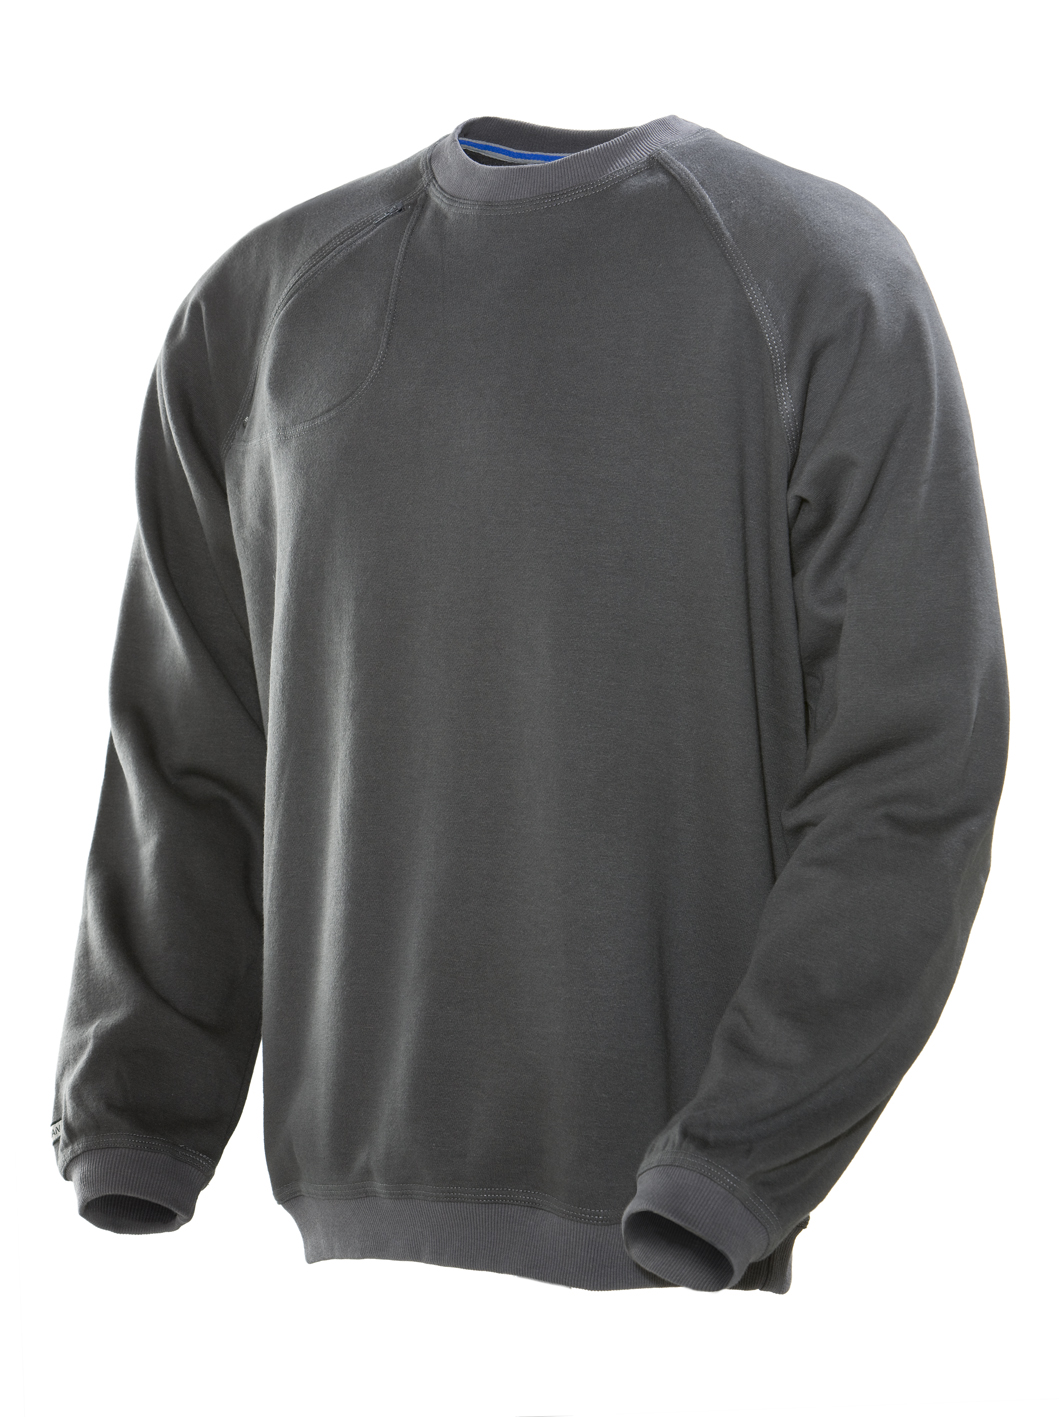 5122 Sweatshirt XS gris antracite